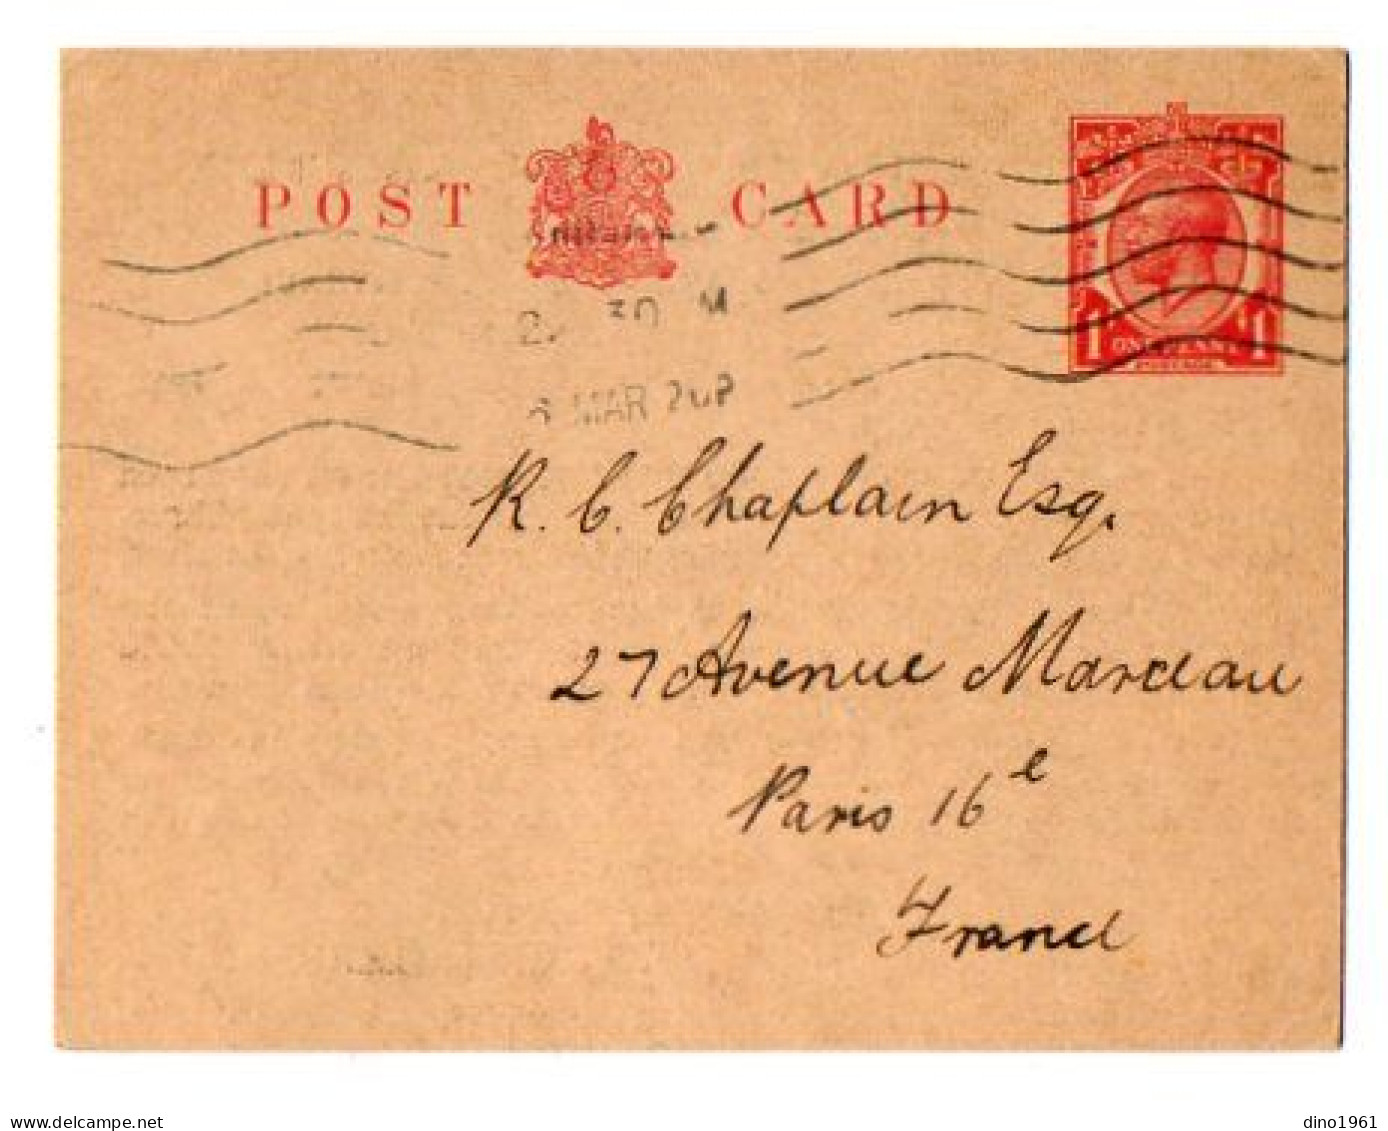 TB 4392 - 1920 - Entier Postal - Commercial Card - KEELEY Silver Mines Limited LONDON - Thomas MALLINSON Secretary - Luftpost & Aerogramme